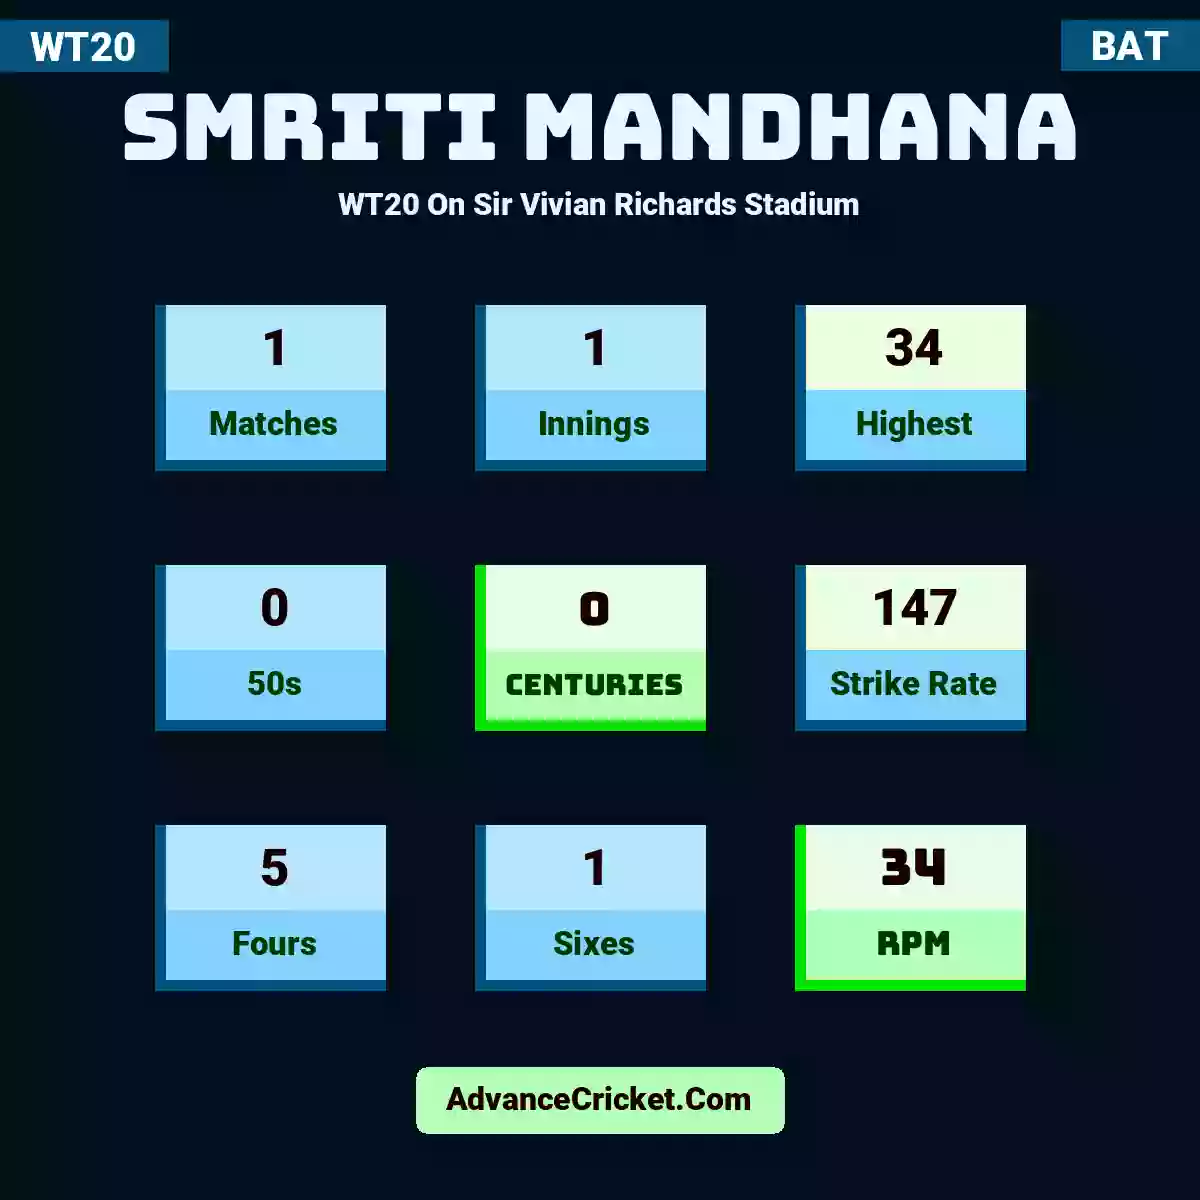 Smriti Mandhana WT20  On Sir Vivian Richards Stadium, Smriti Mandhana played 1 matches, scored 34 runs as highest, 0 half-centuries, and 0 centuries, with a strike rate of 147. S.Mandhana hit 5 fours and 1 sixes, with an RPM of 34.